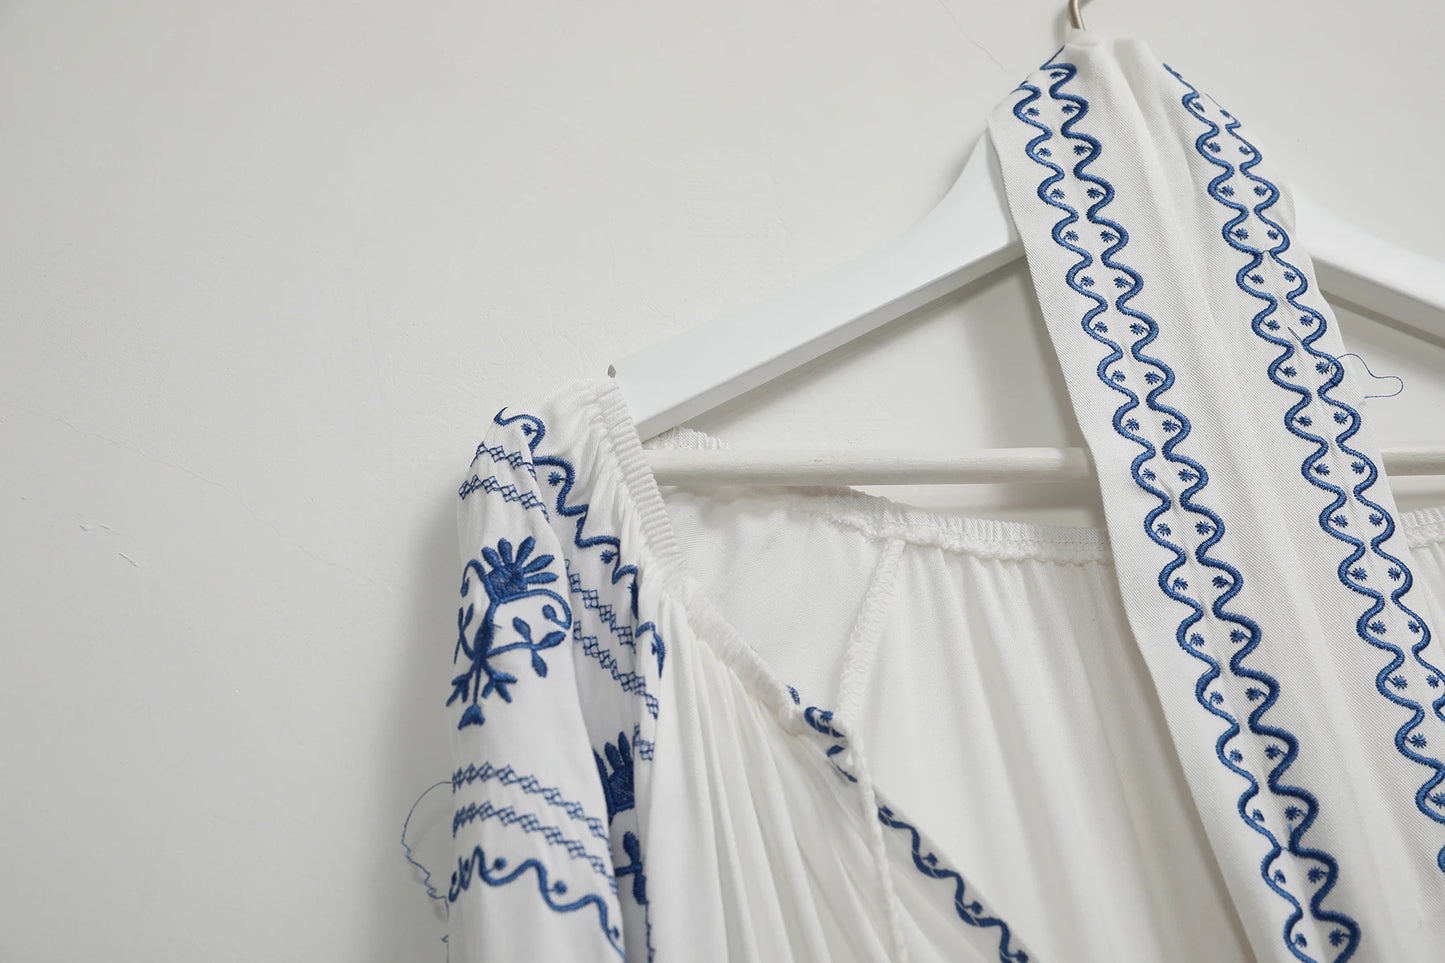 Women's Vintage Boho Beach Hippie Long Sleeve Embroidery Loose Maxi Dress